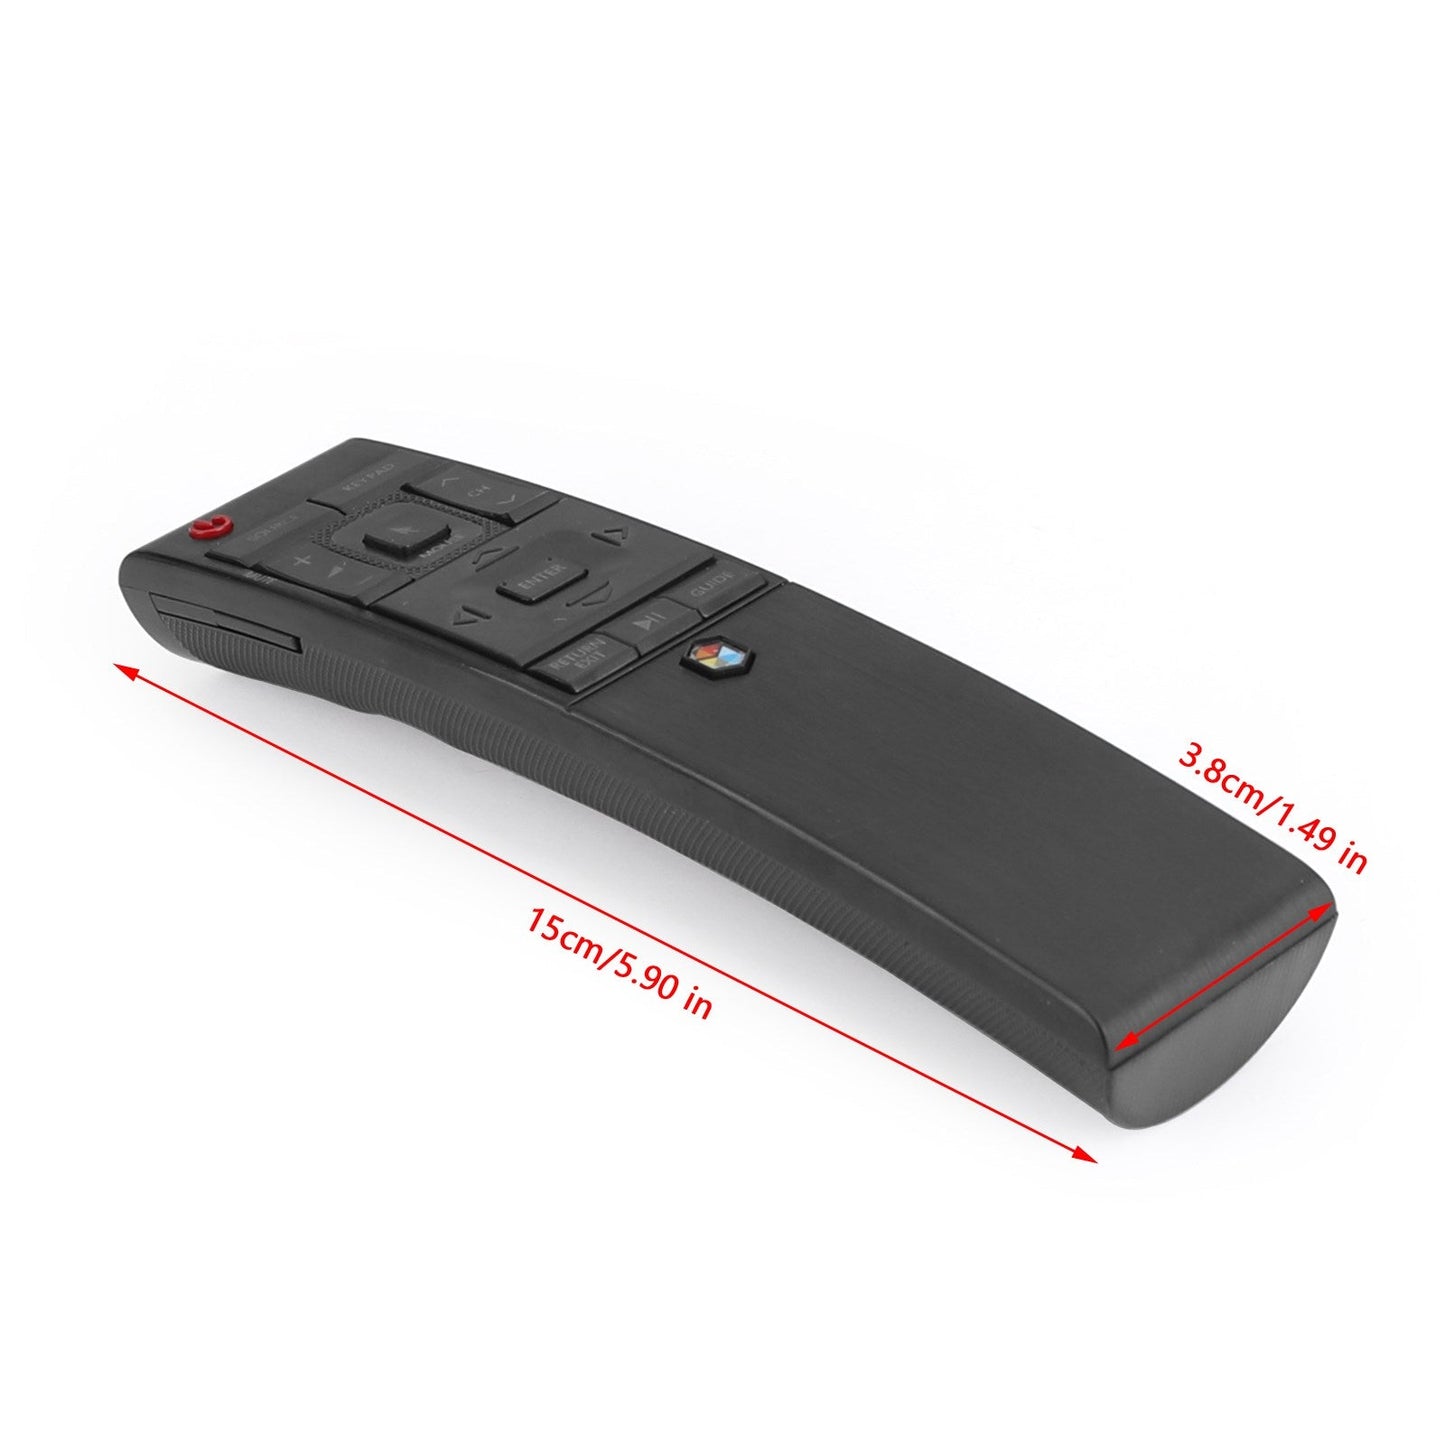 TV Remote Controller Fit for Samsung HUB Smart TV BN59-01221J BN59-01220A